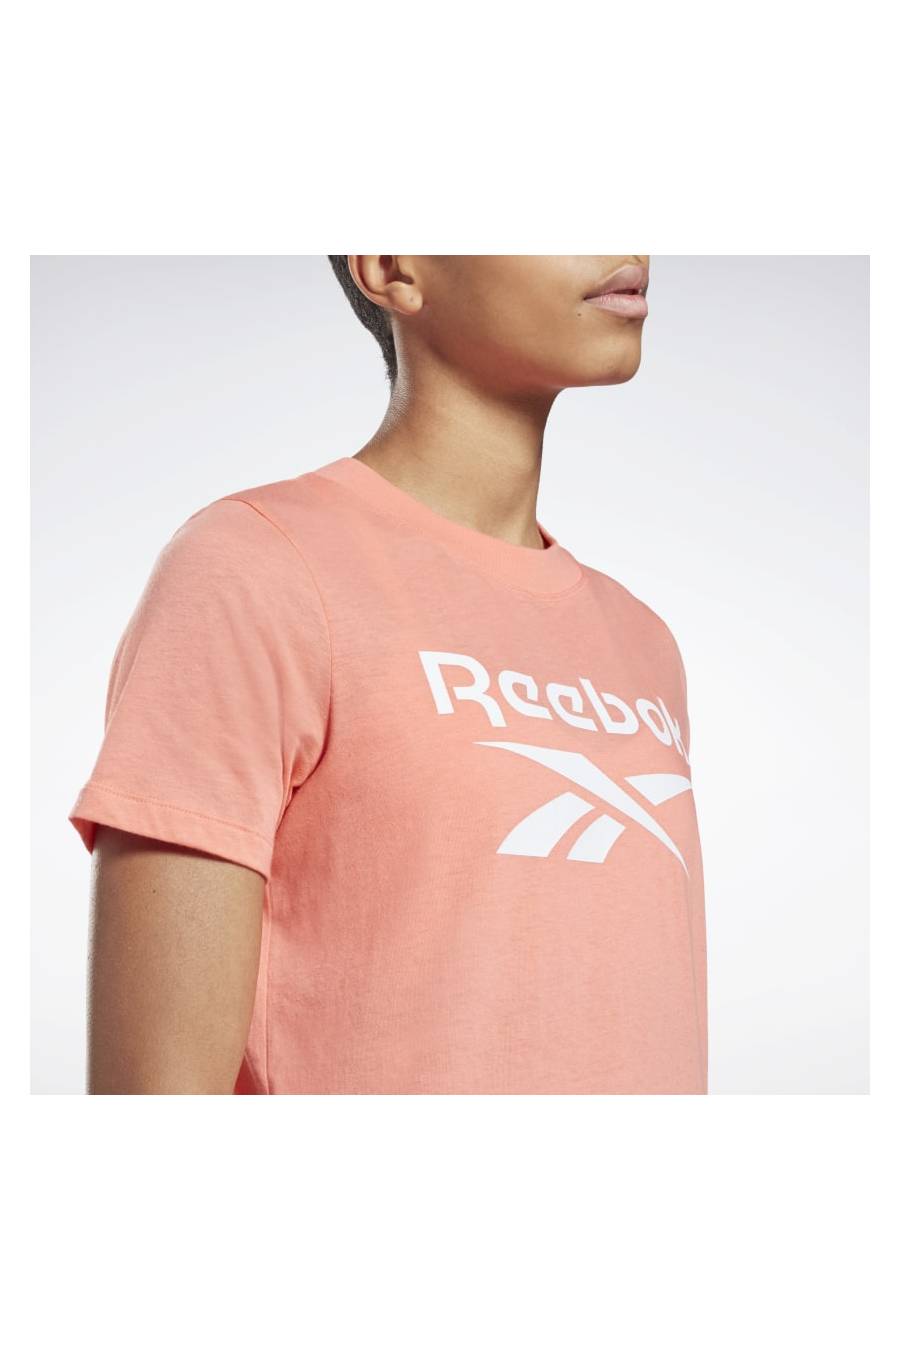 Camiseta Reebok Identity Logo - Twisted Coral - Msdsport by Masdeporte